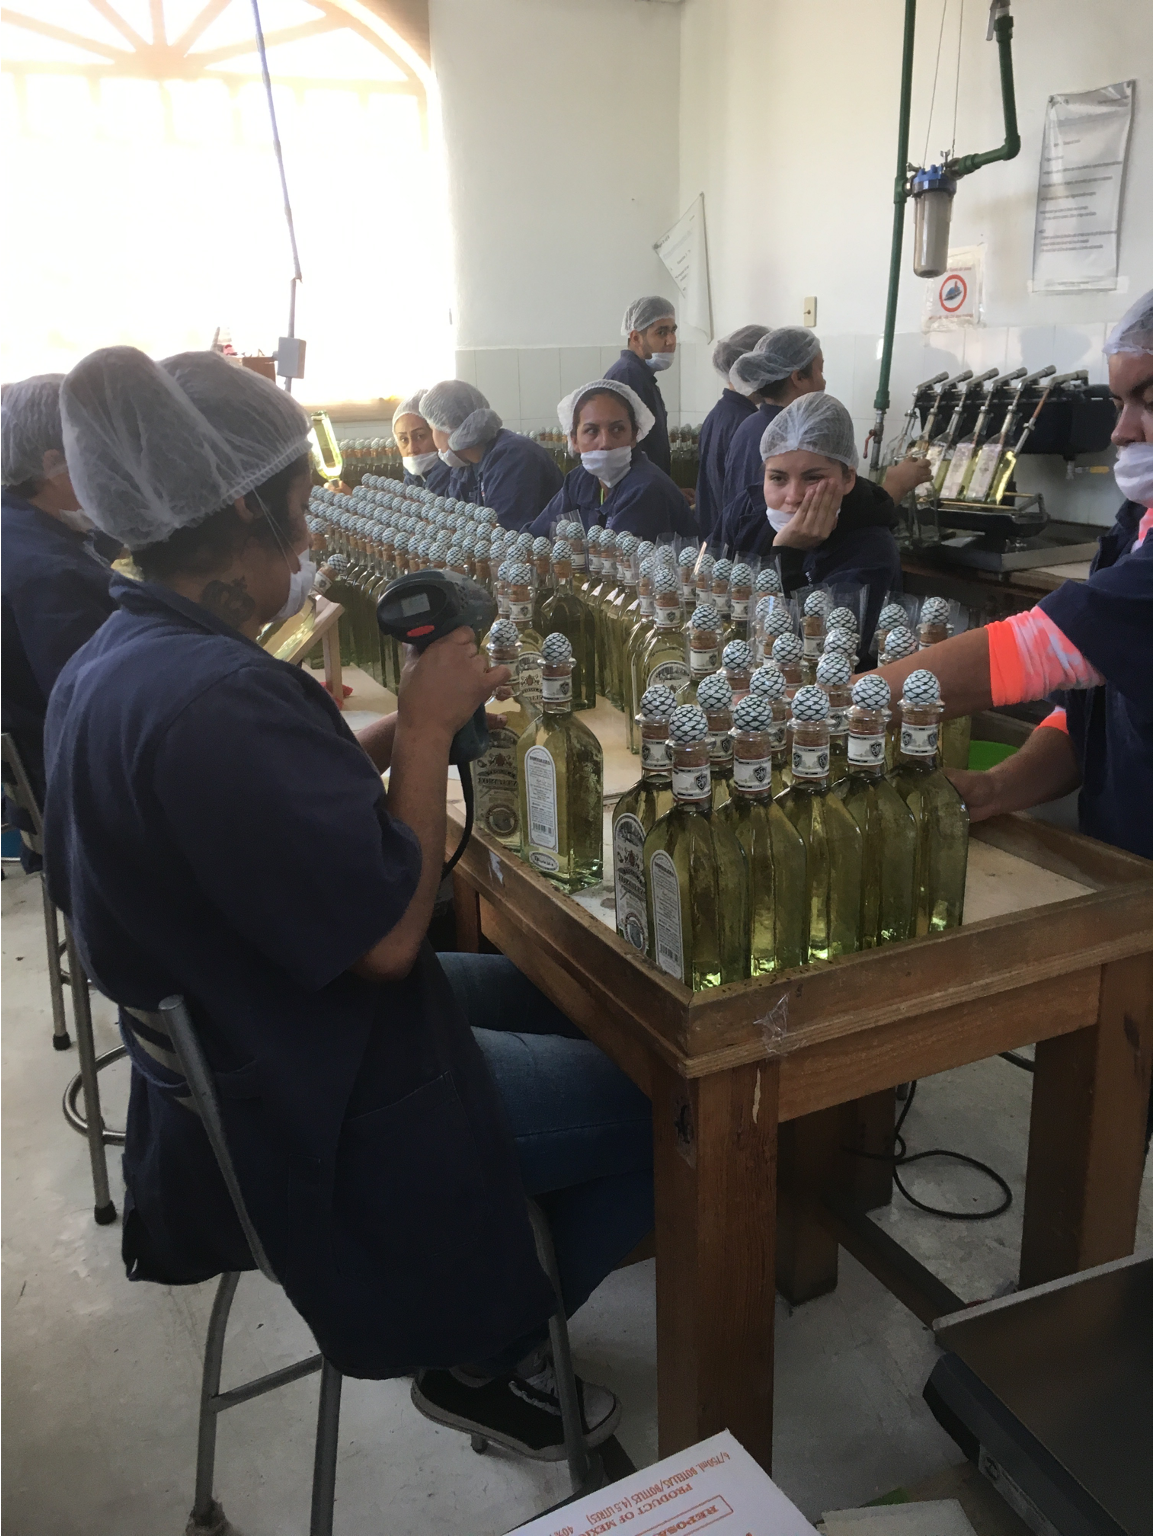 women in hairnets processing tequila bottles